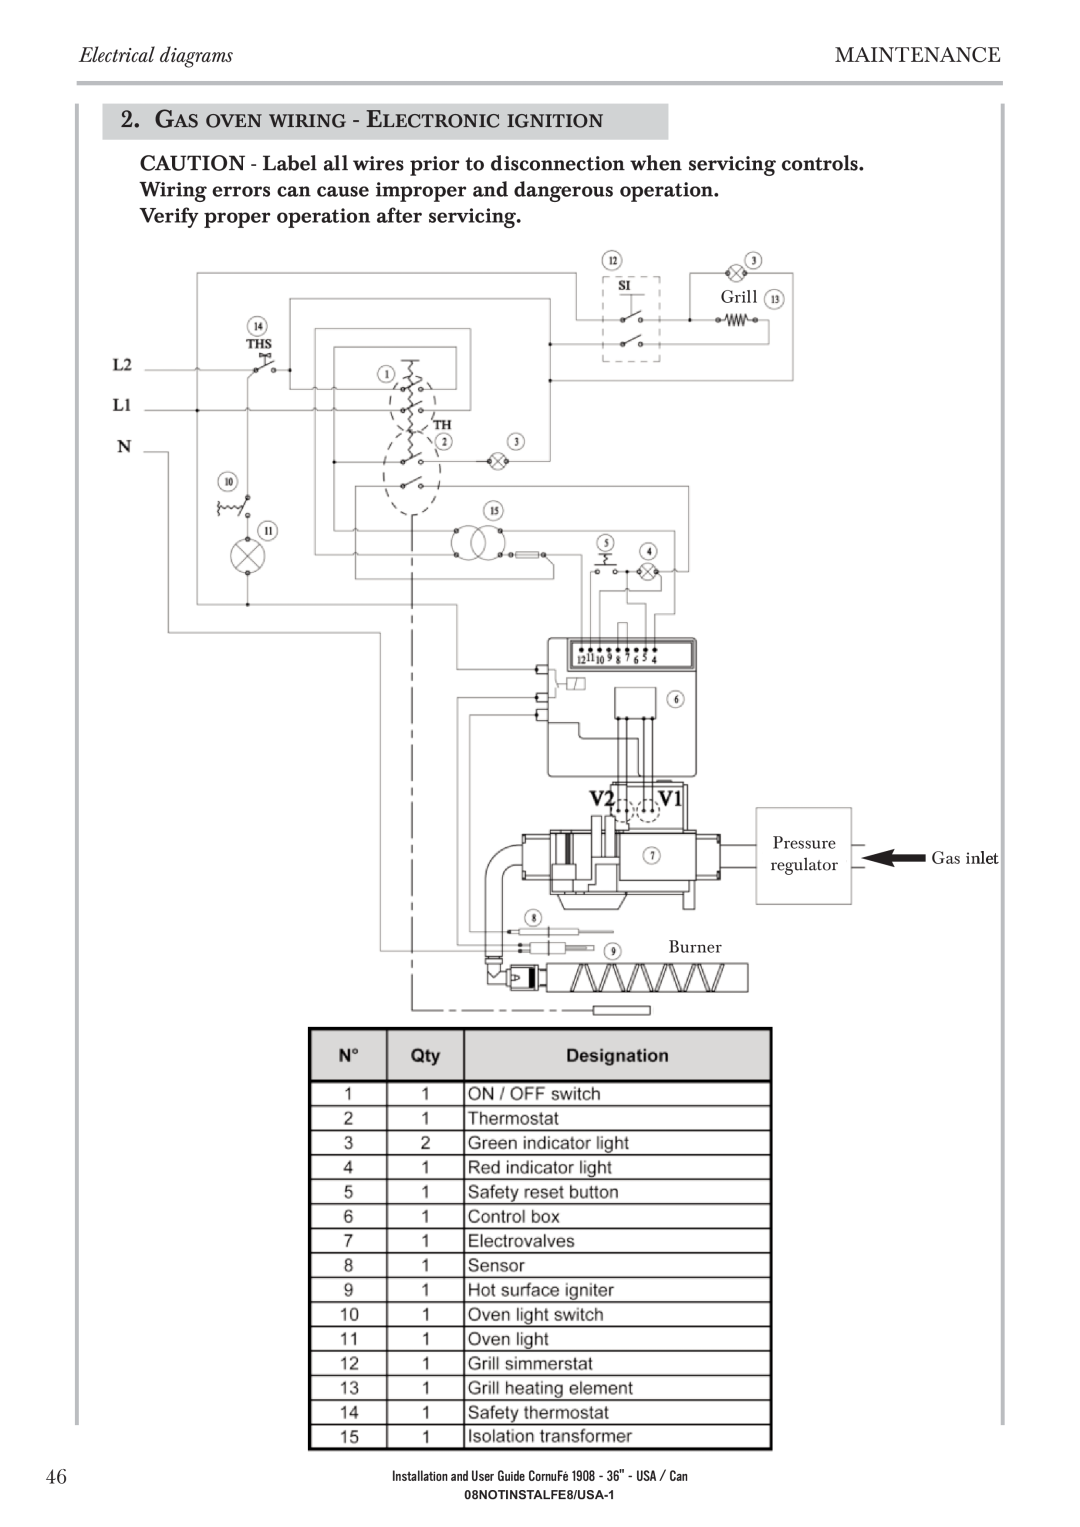 GE 1908 - 36 Gas Oven Wiring - Electronic Ignition, Grill, Pressure, Gas inlet, regulator, Burner, 08NOTINSTALFE8/USA-1 